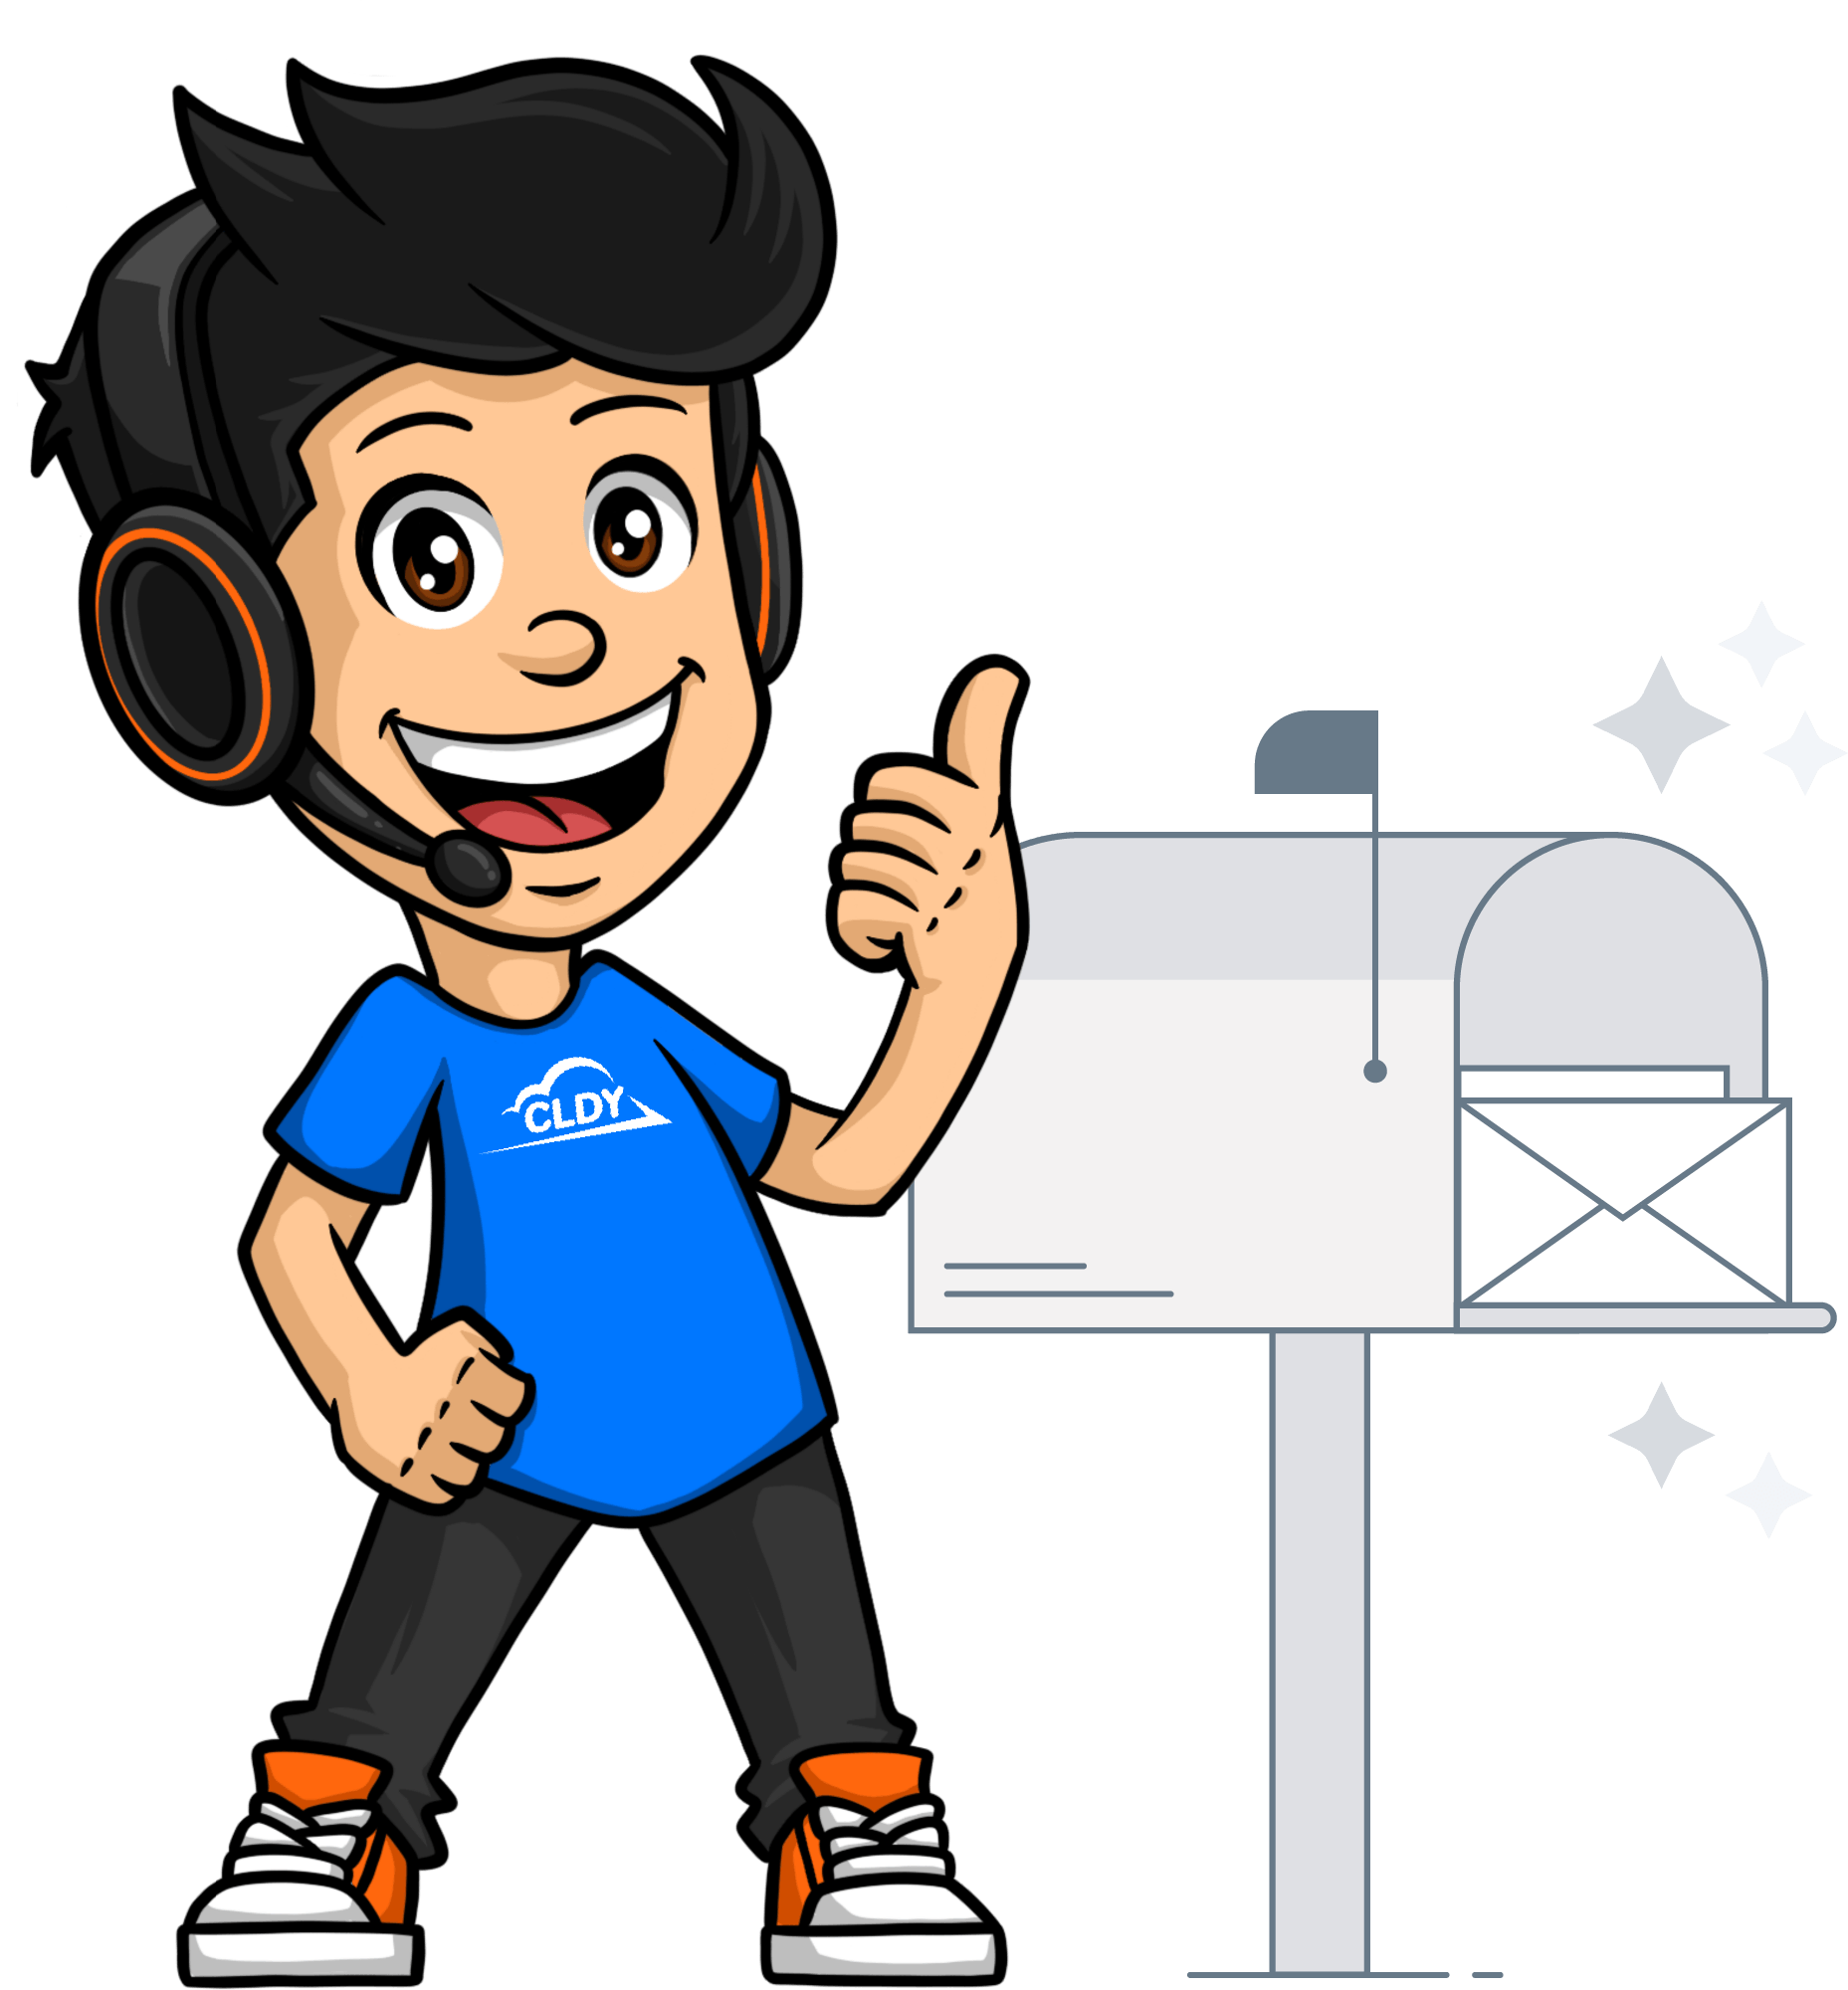 cldy-boy-mailbox